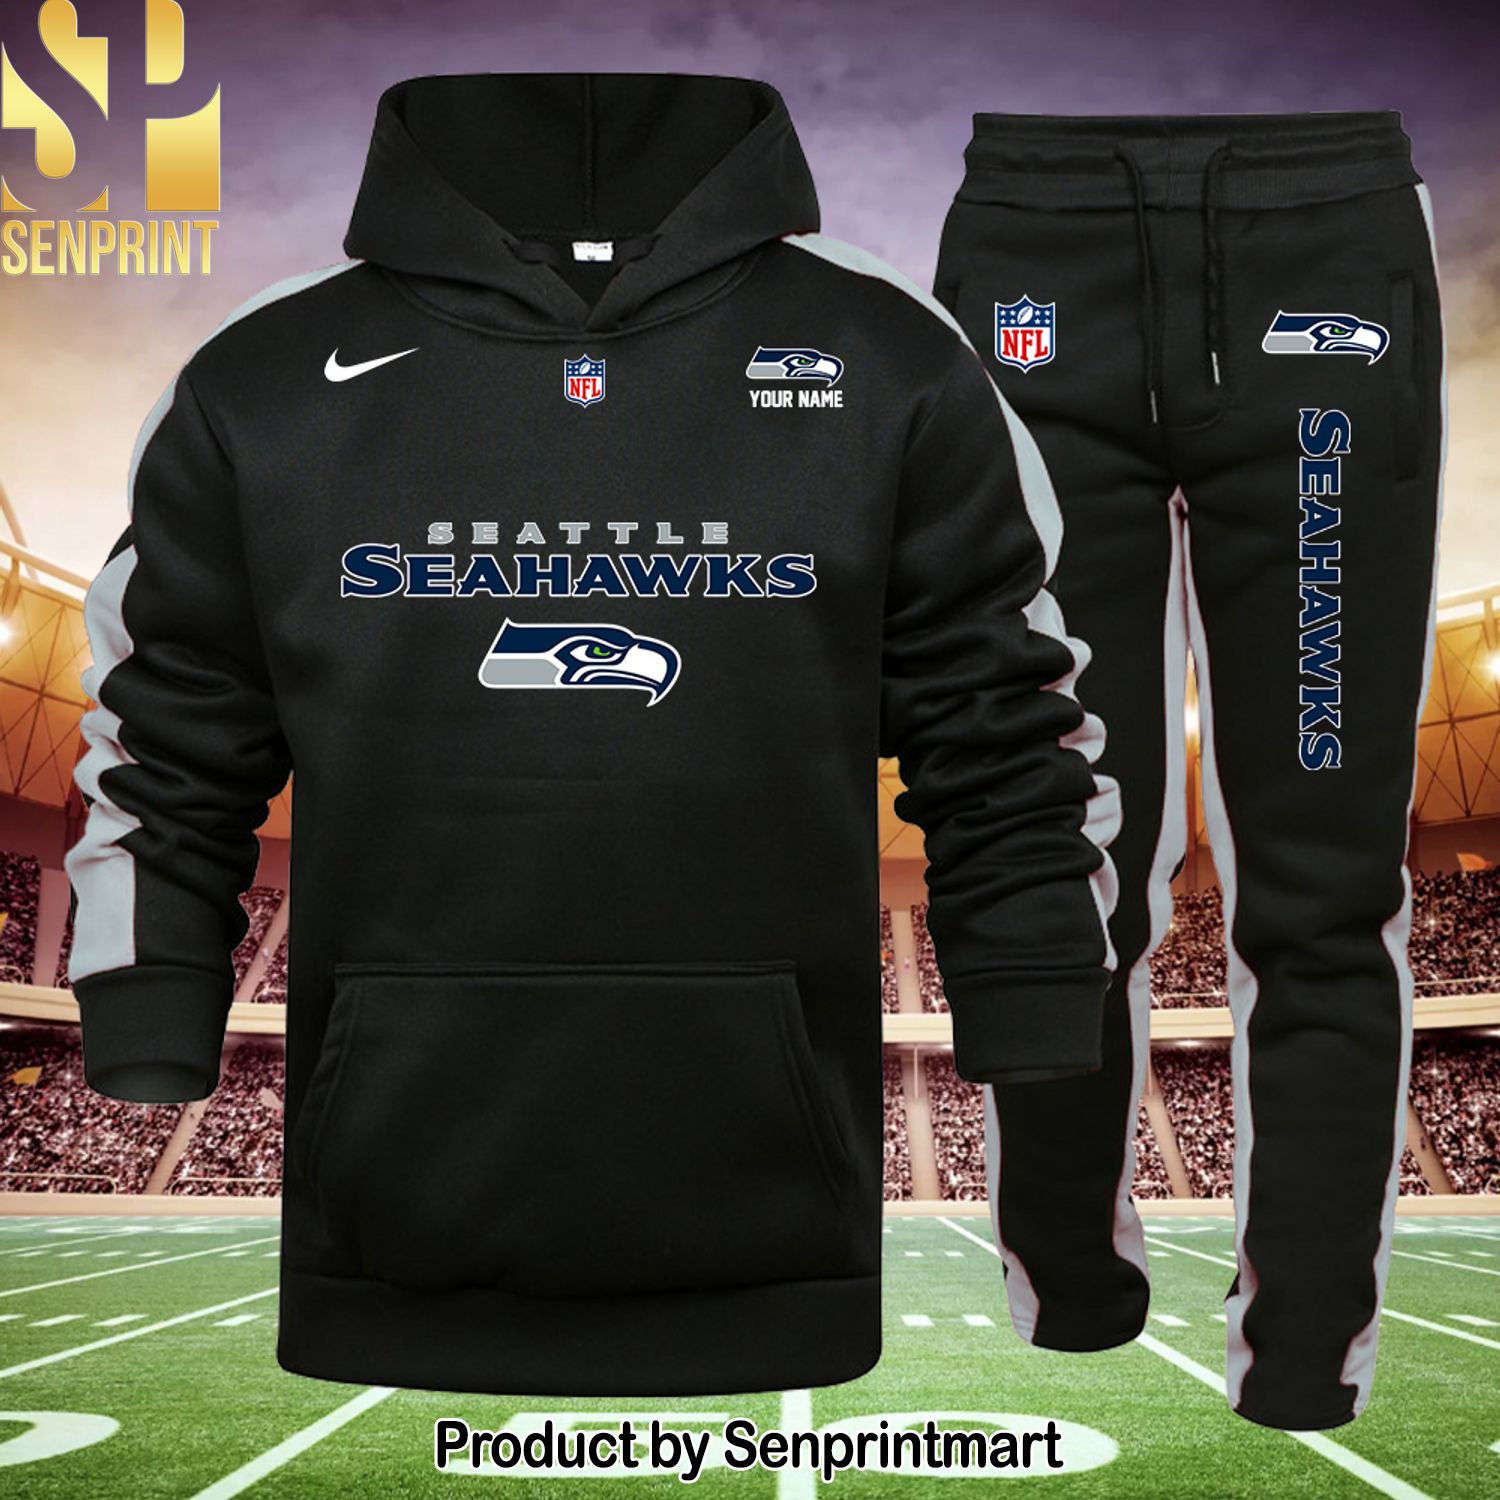 NFL Seattle Seahawks Classic Shirt and Sweatpants